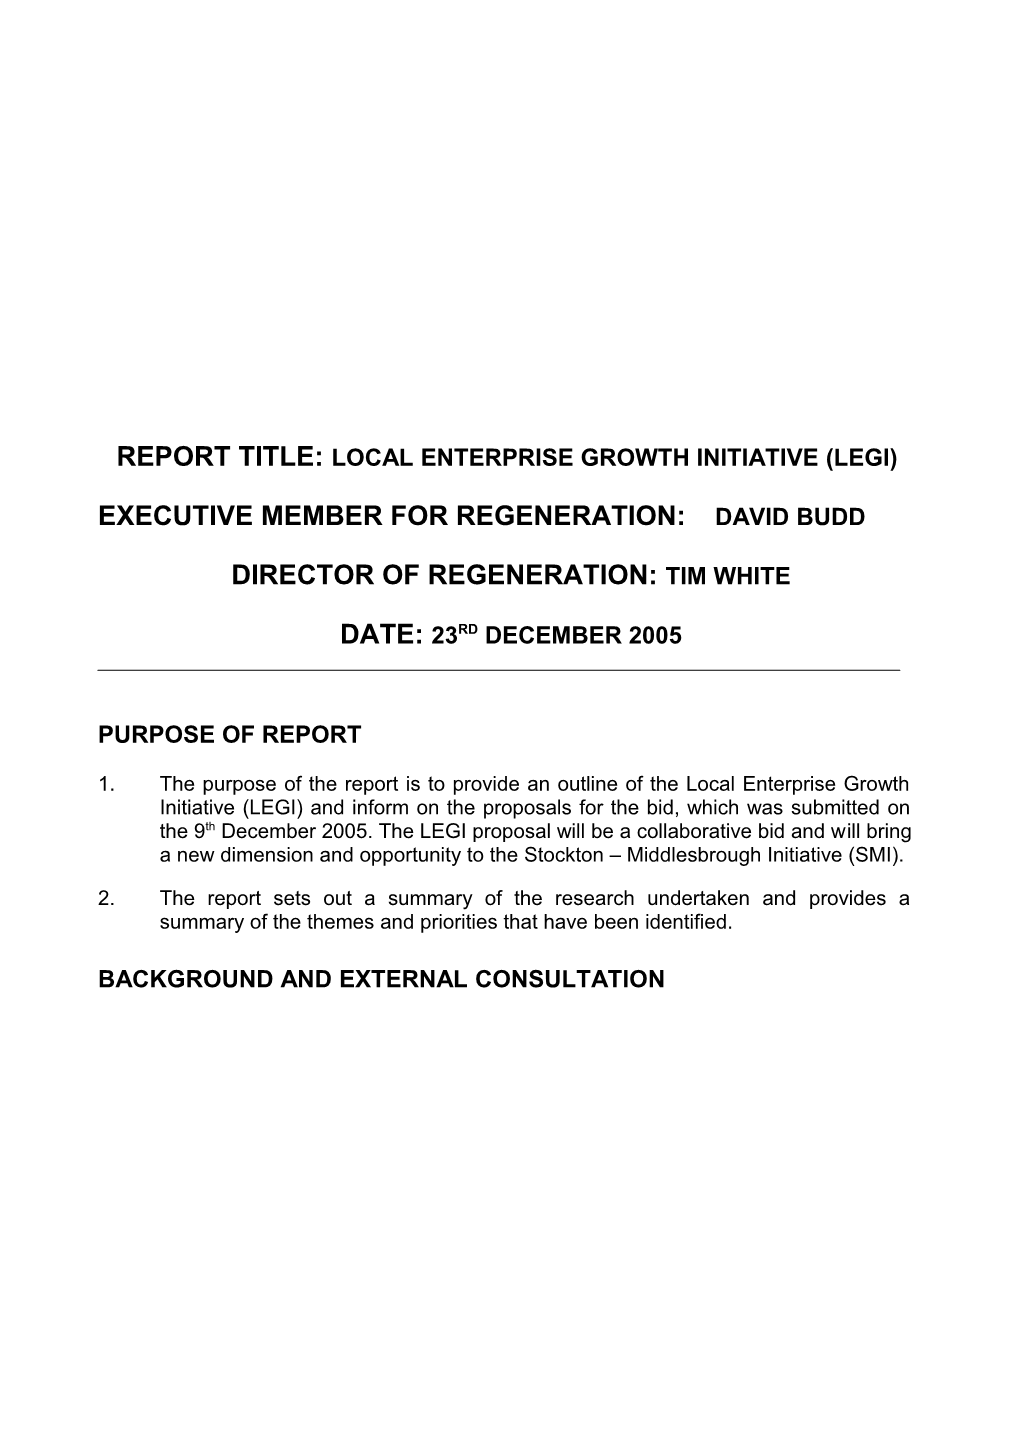 Report Title: Local Enterprise Growth Initiative (Legi)